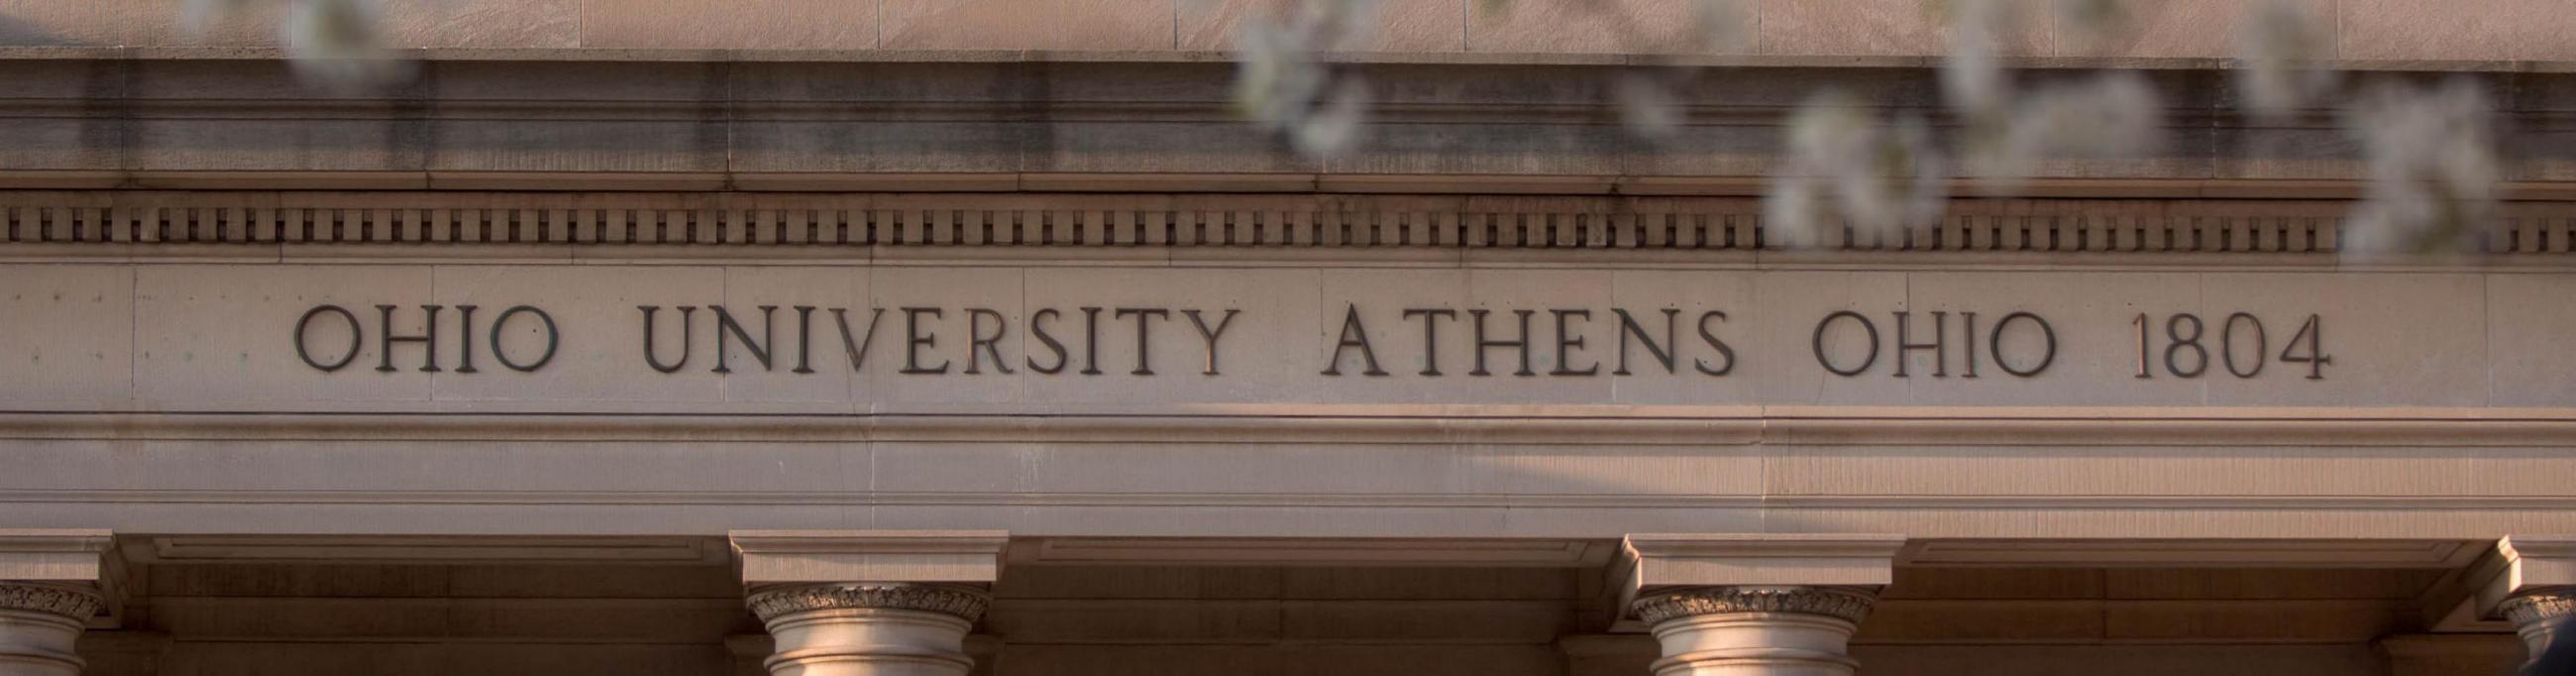 Close-up of a Ohio University building exterior that reads "Ohio University Athens Ohio 1804."